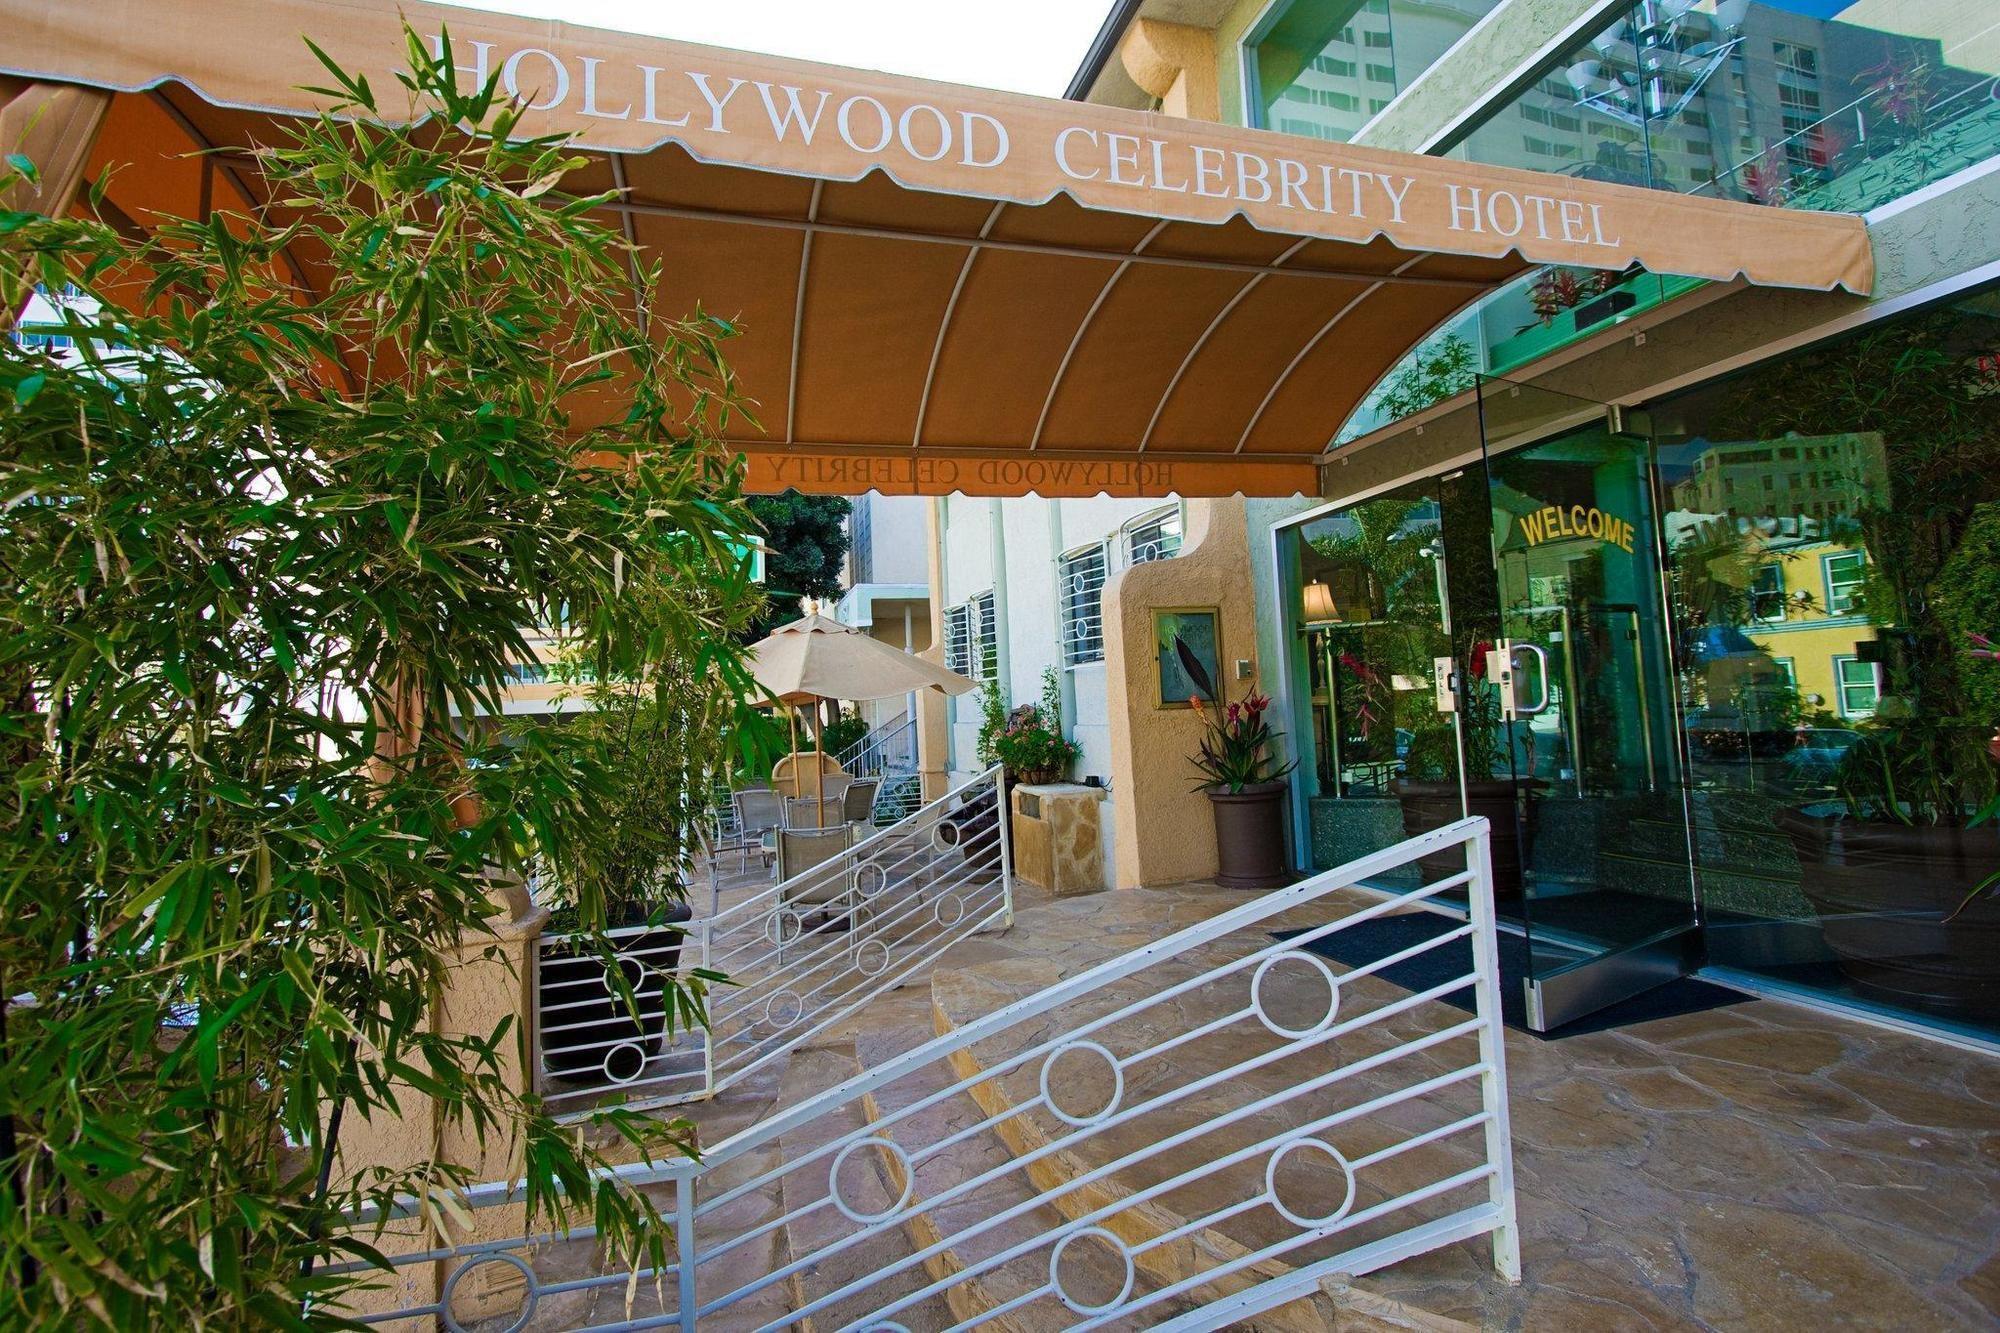 Vista Exterior Hollywood Celebrity Hotel